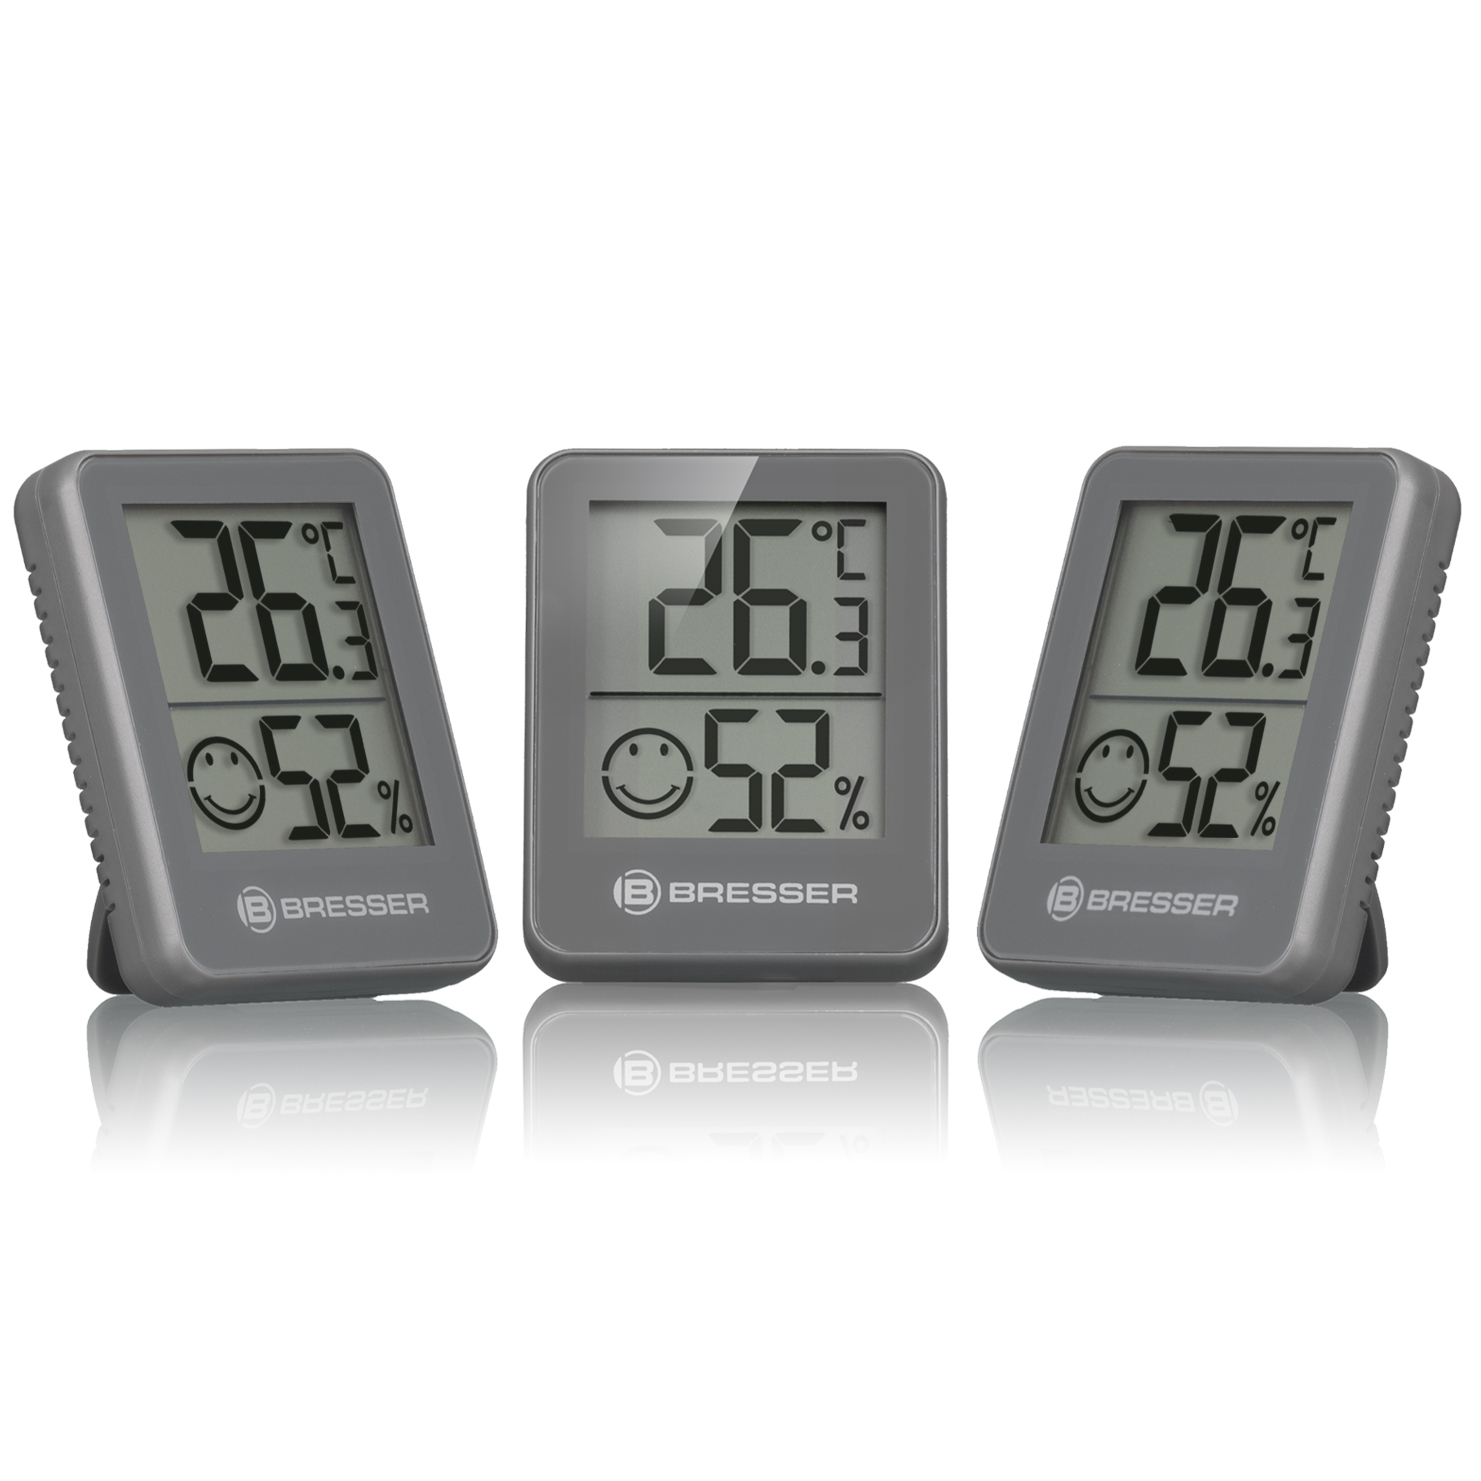 BRESSER 6er-Set Wetterstation Thermo-/Hygrometer Temeo Hygro Indikator